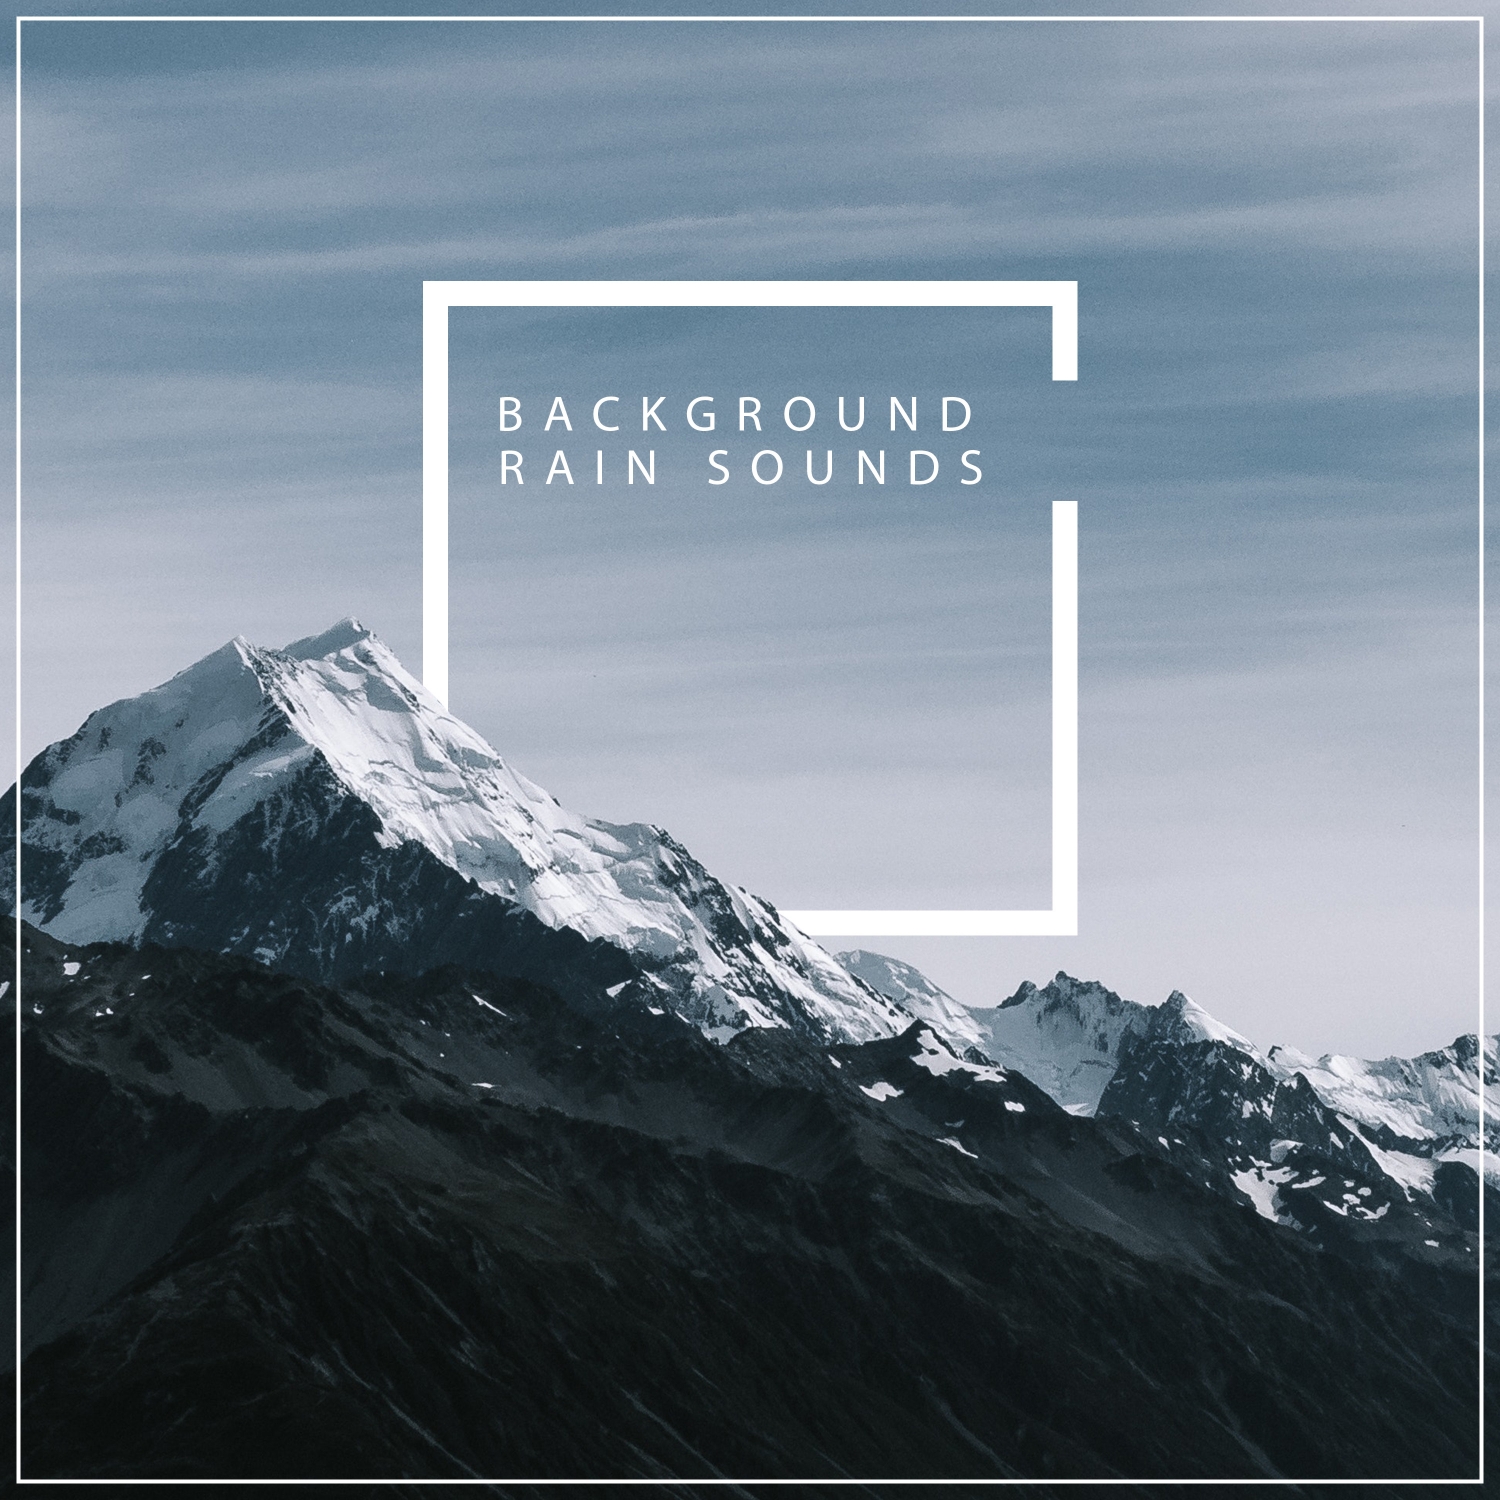 12 Background Rain Album for Study & Reflection